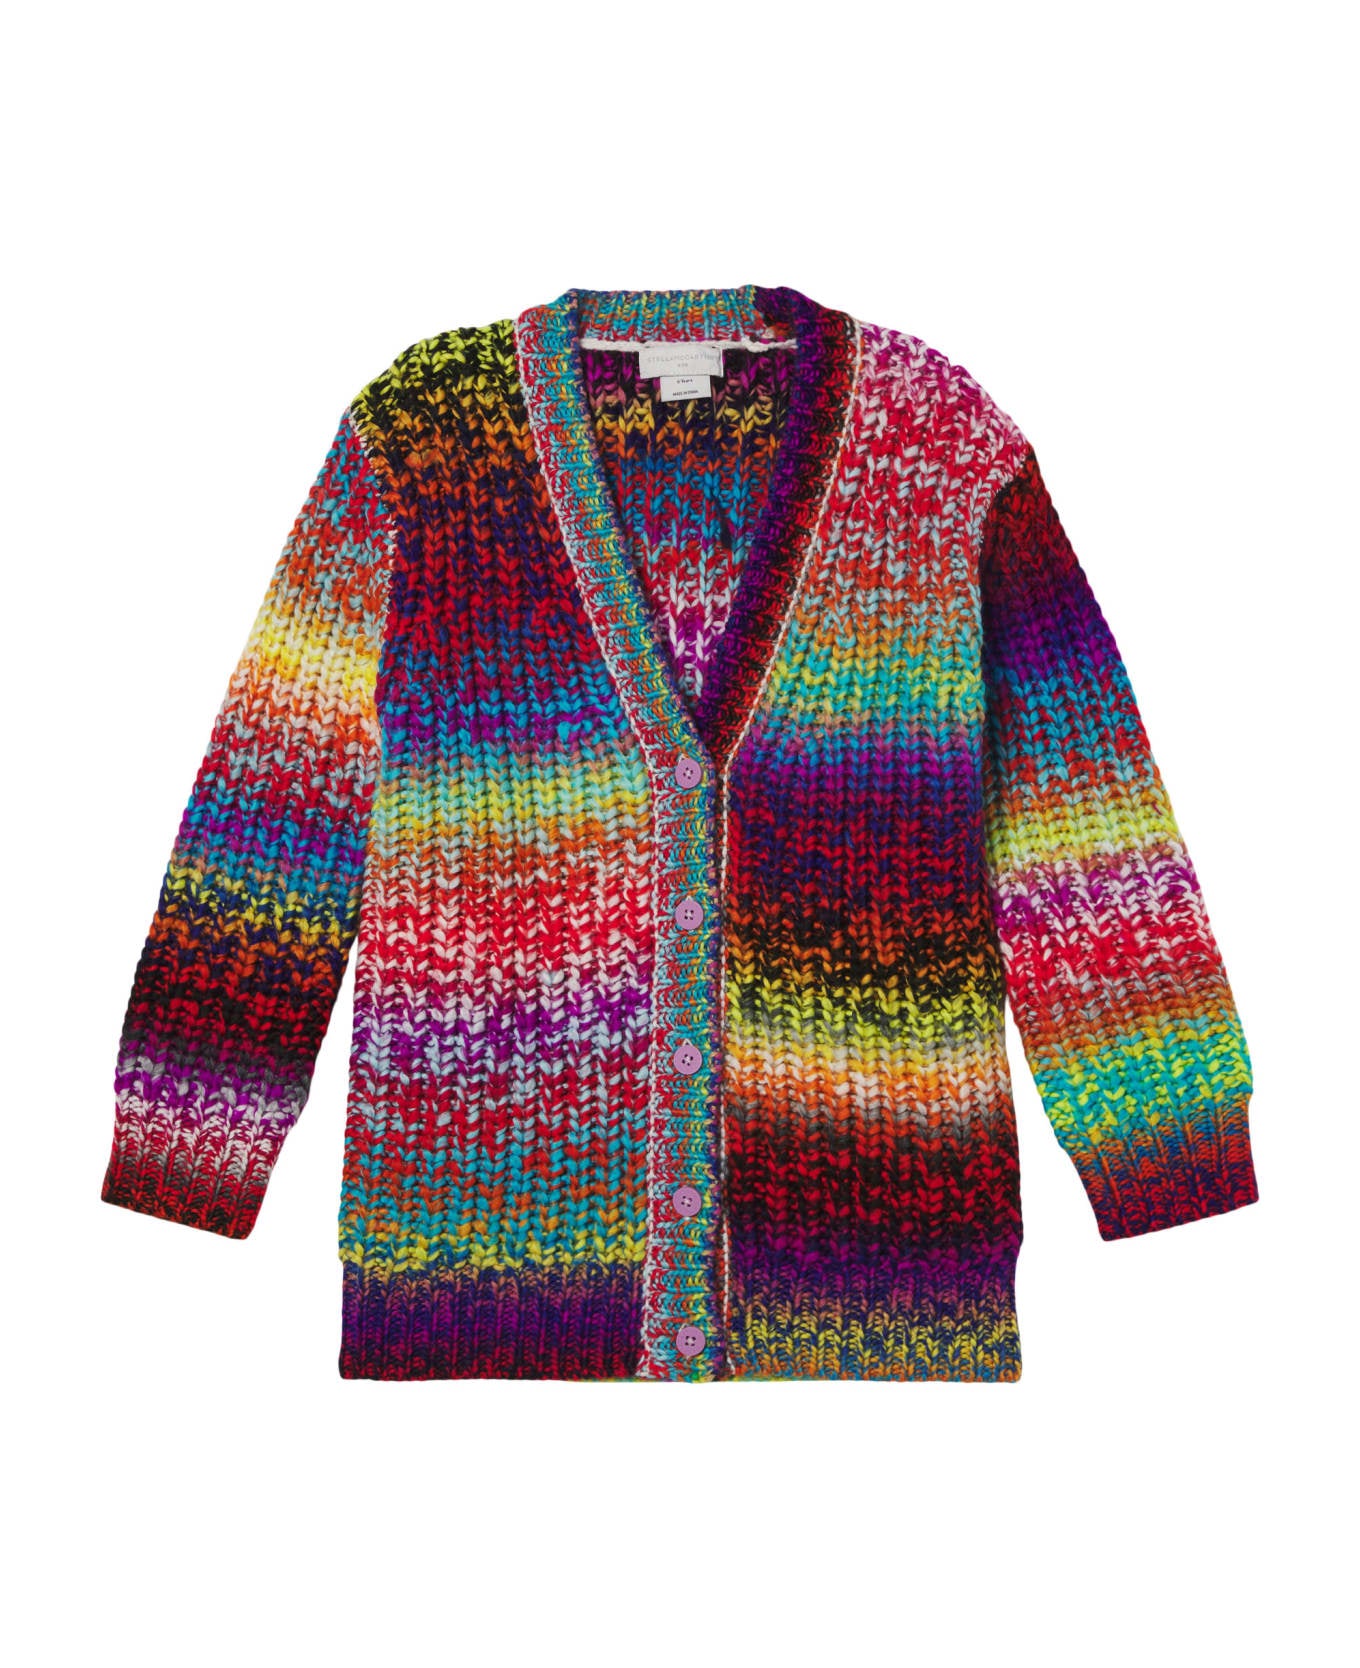 Stella McCartney Kids - Multicolored Knitted Cardigan